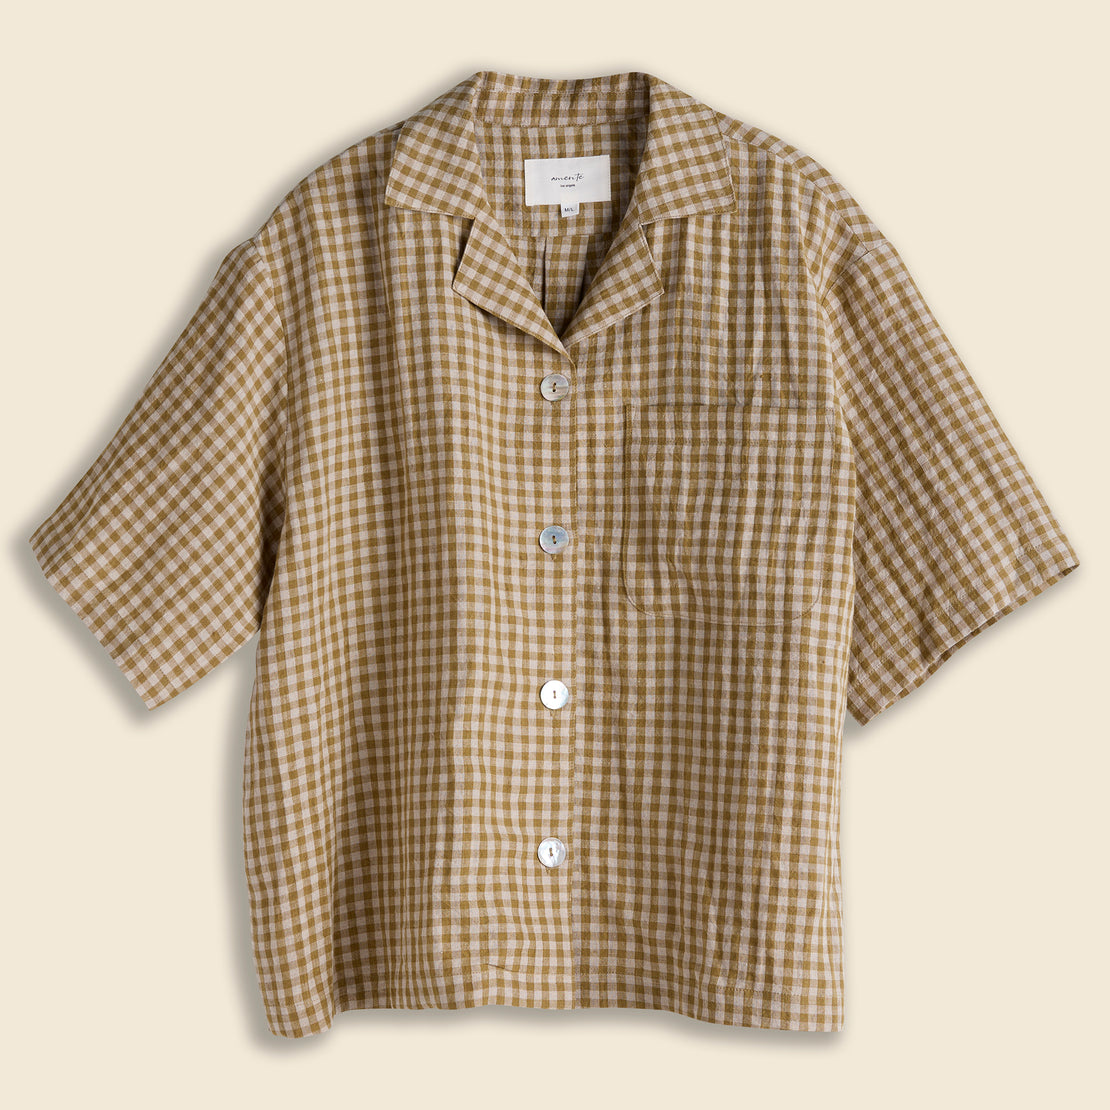 Amente Notched Collar Gingham Shirt - Mustard